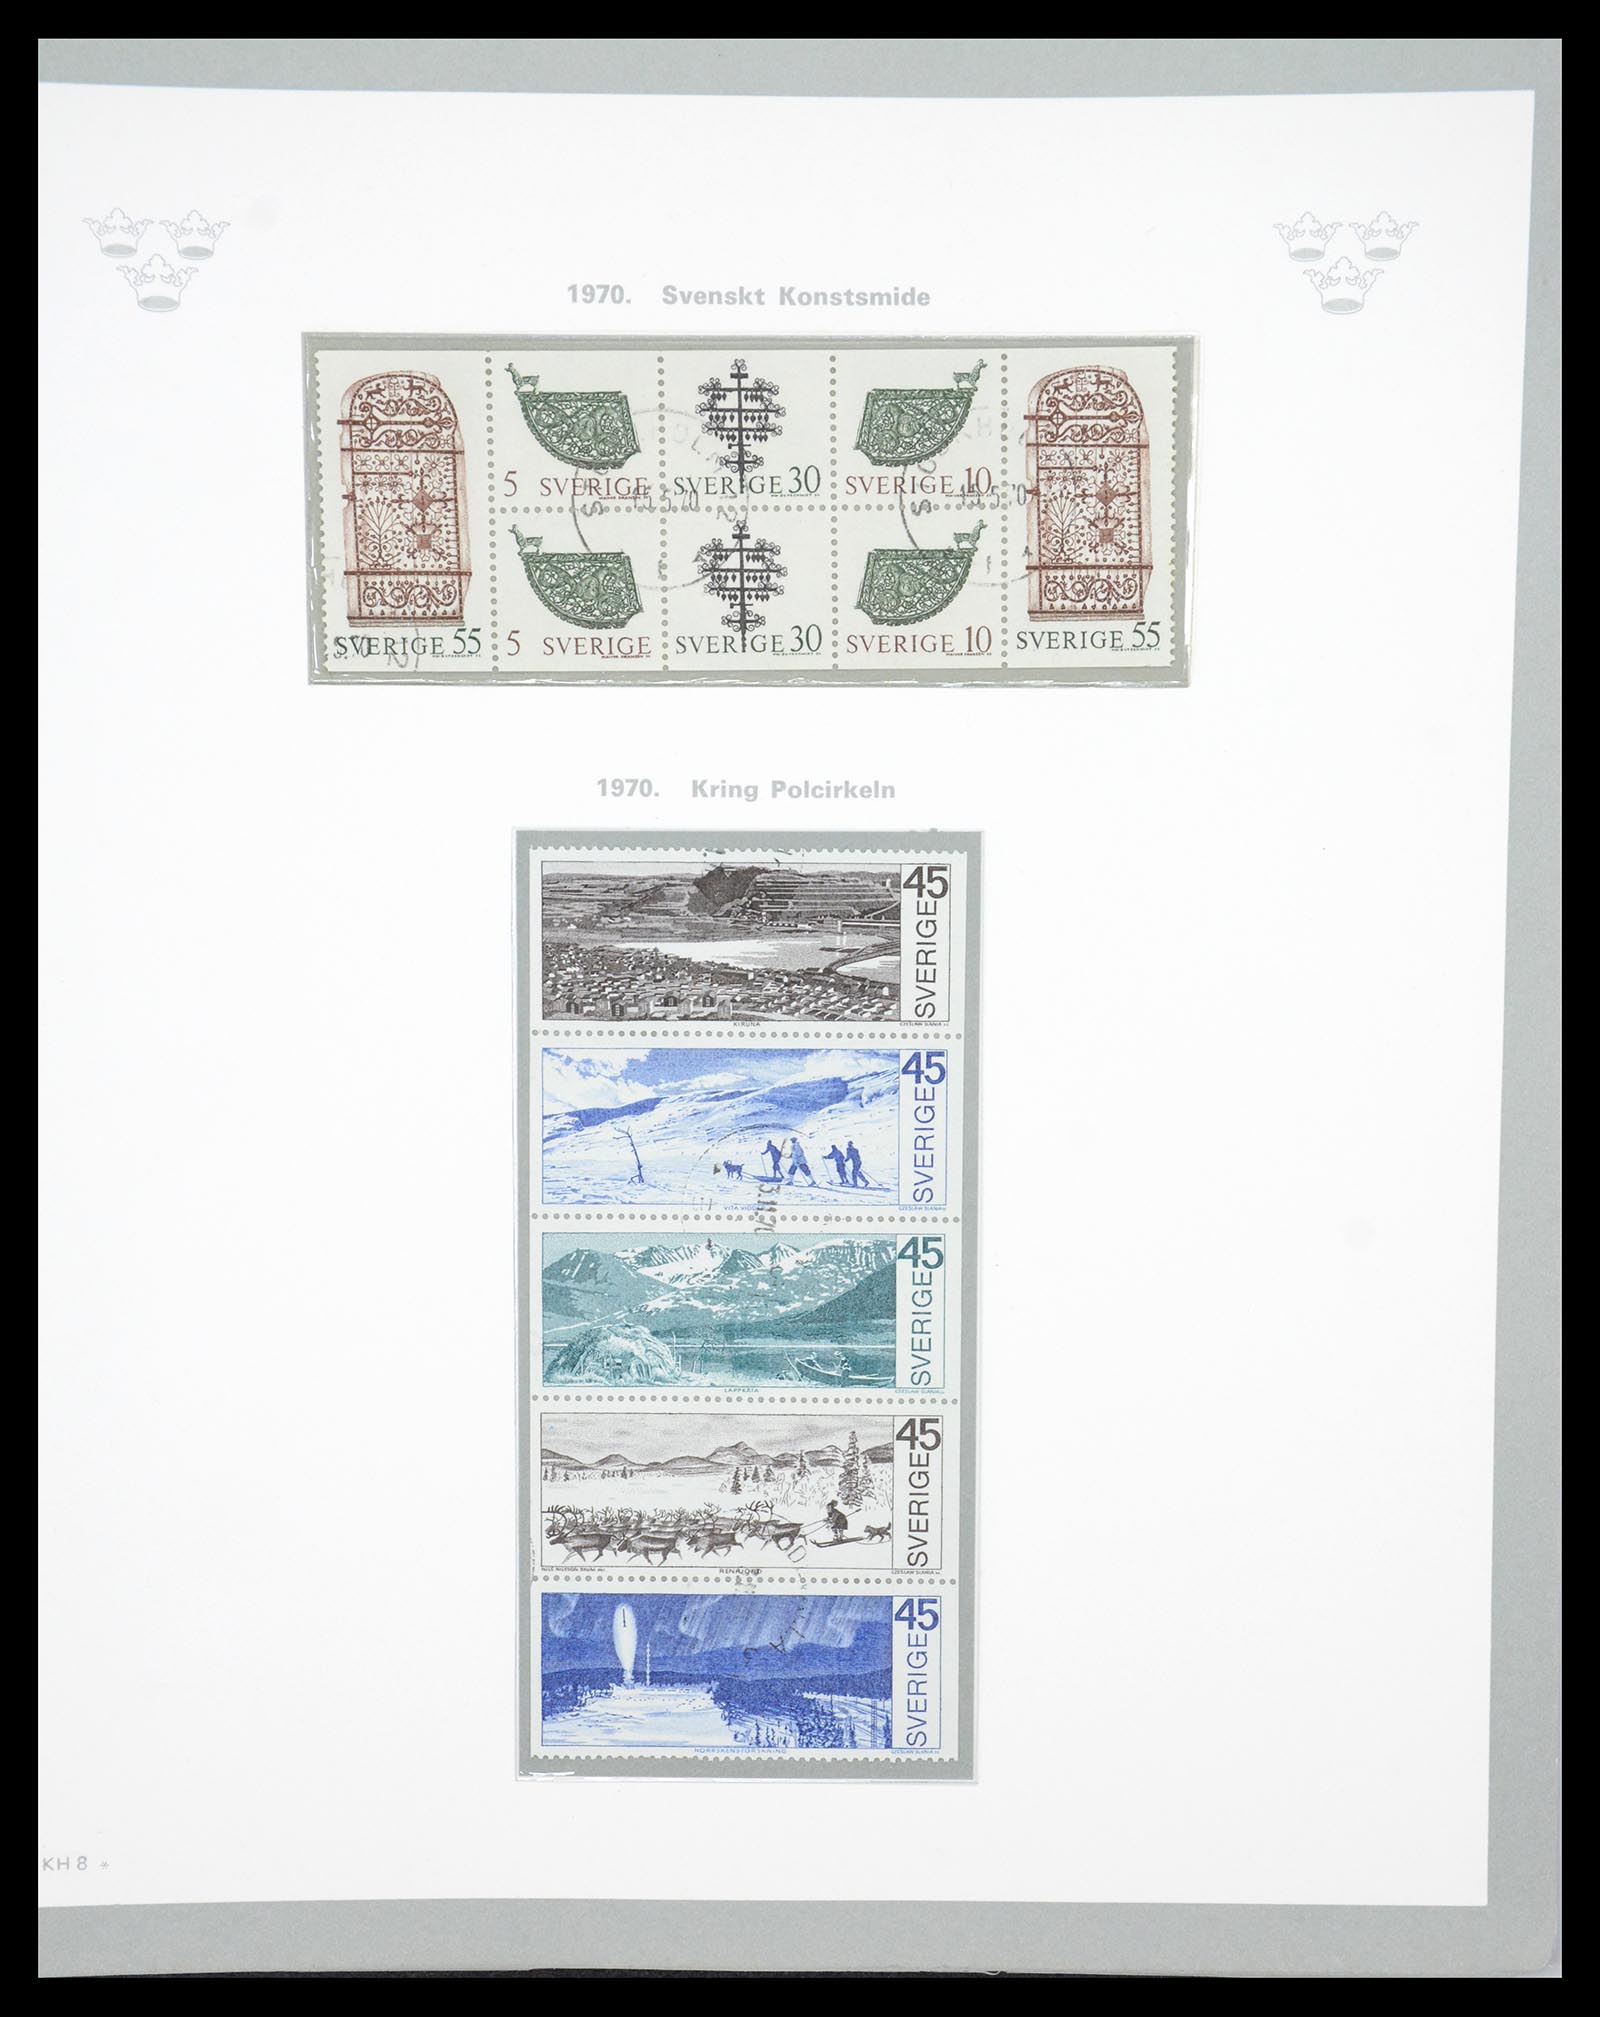 36579 120 - Stamp collection 36579 Zweden complete verzameling 1855-1975.